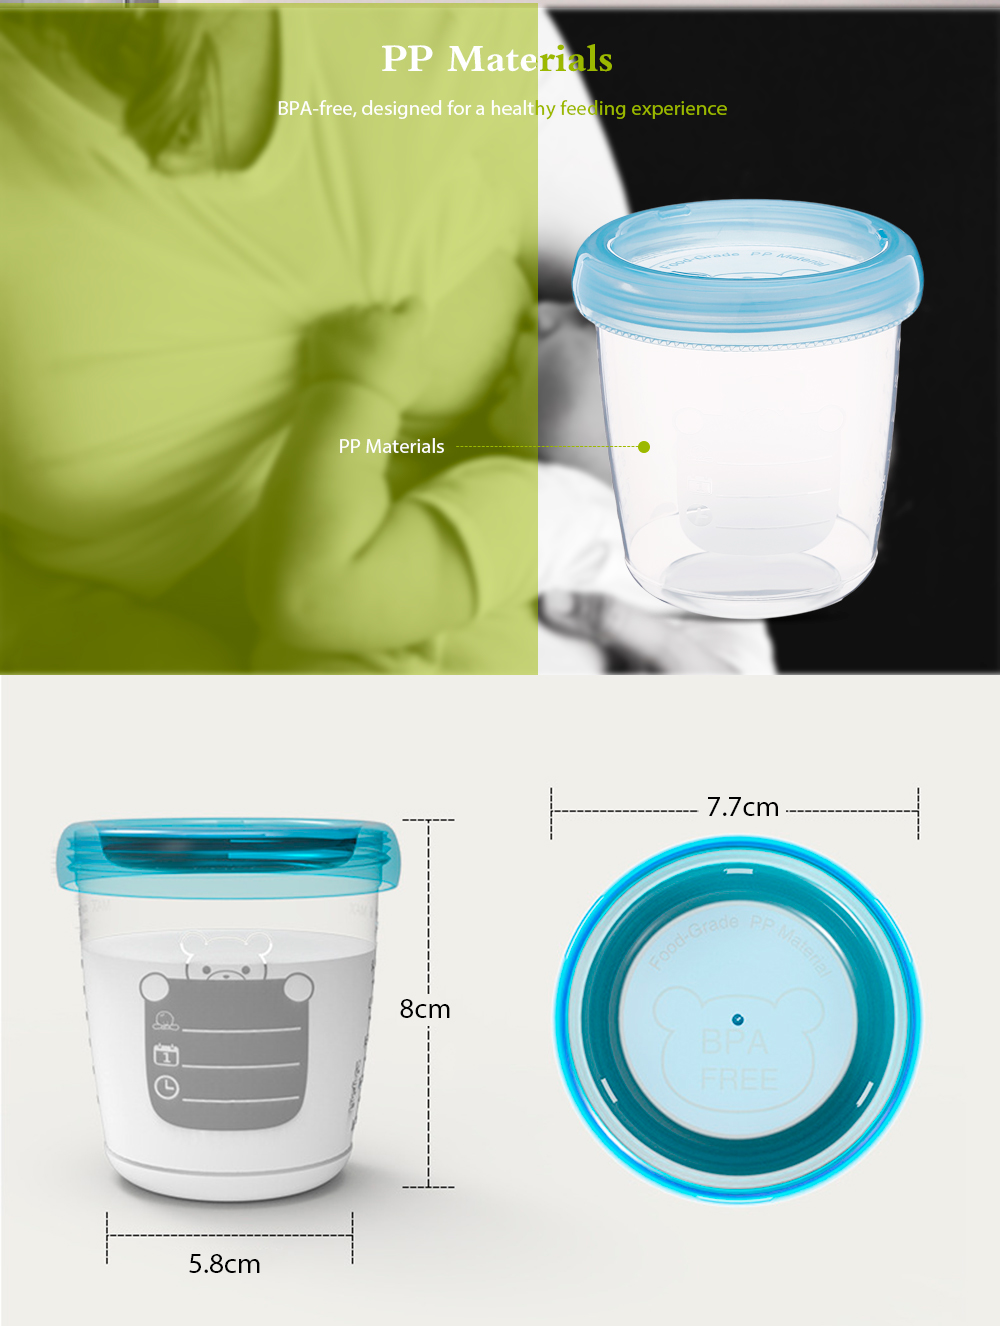 RealBubee 6pcs Reusable Baby 6oz / 180ml Breast Milk Storage Cups